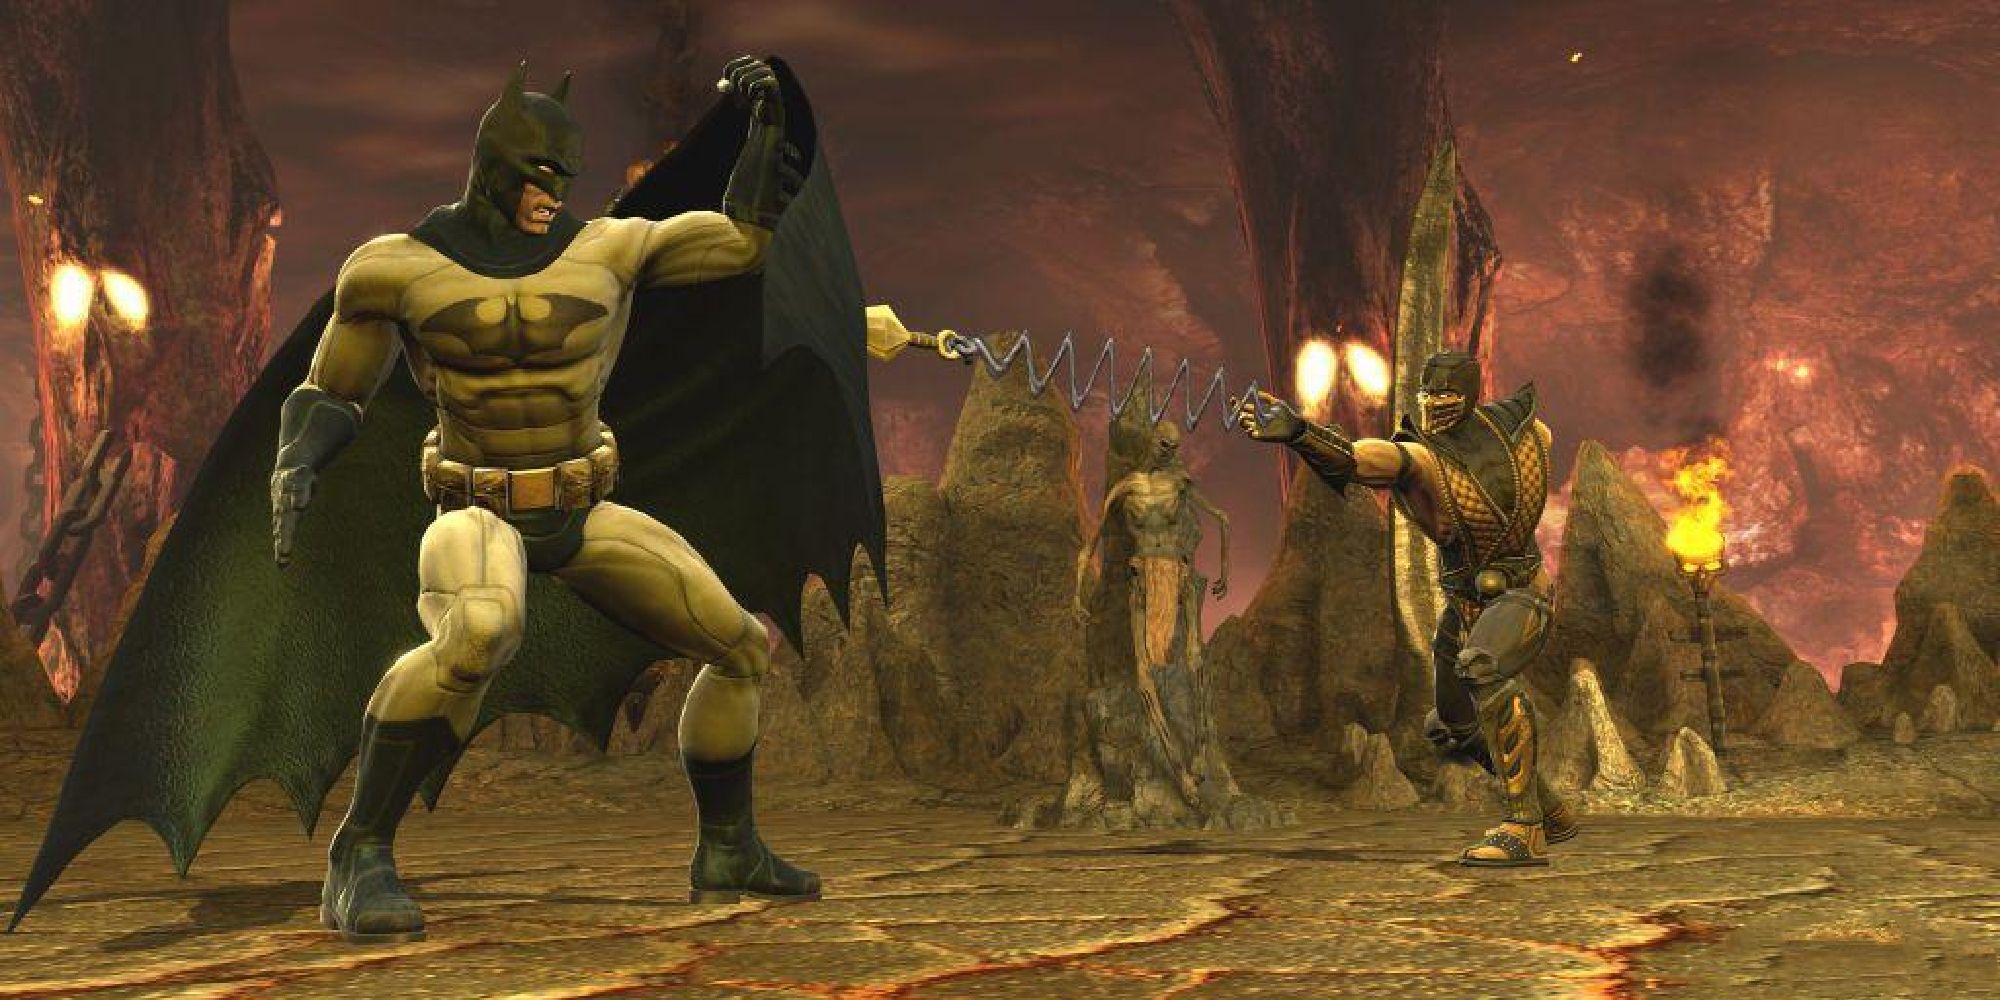 Mortal Kombat vs DC